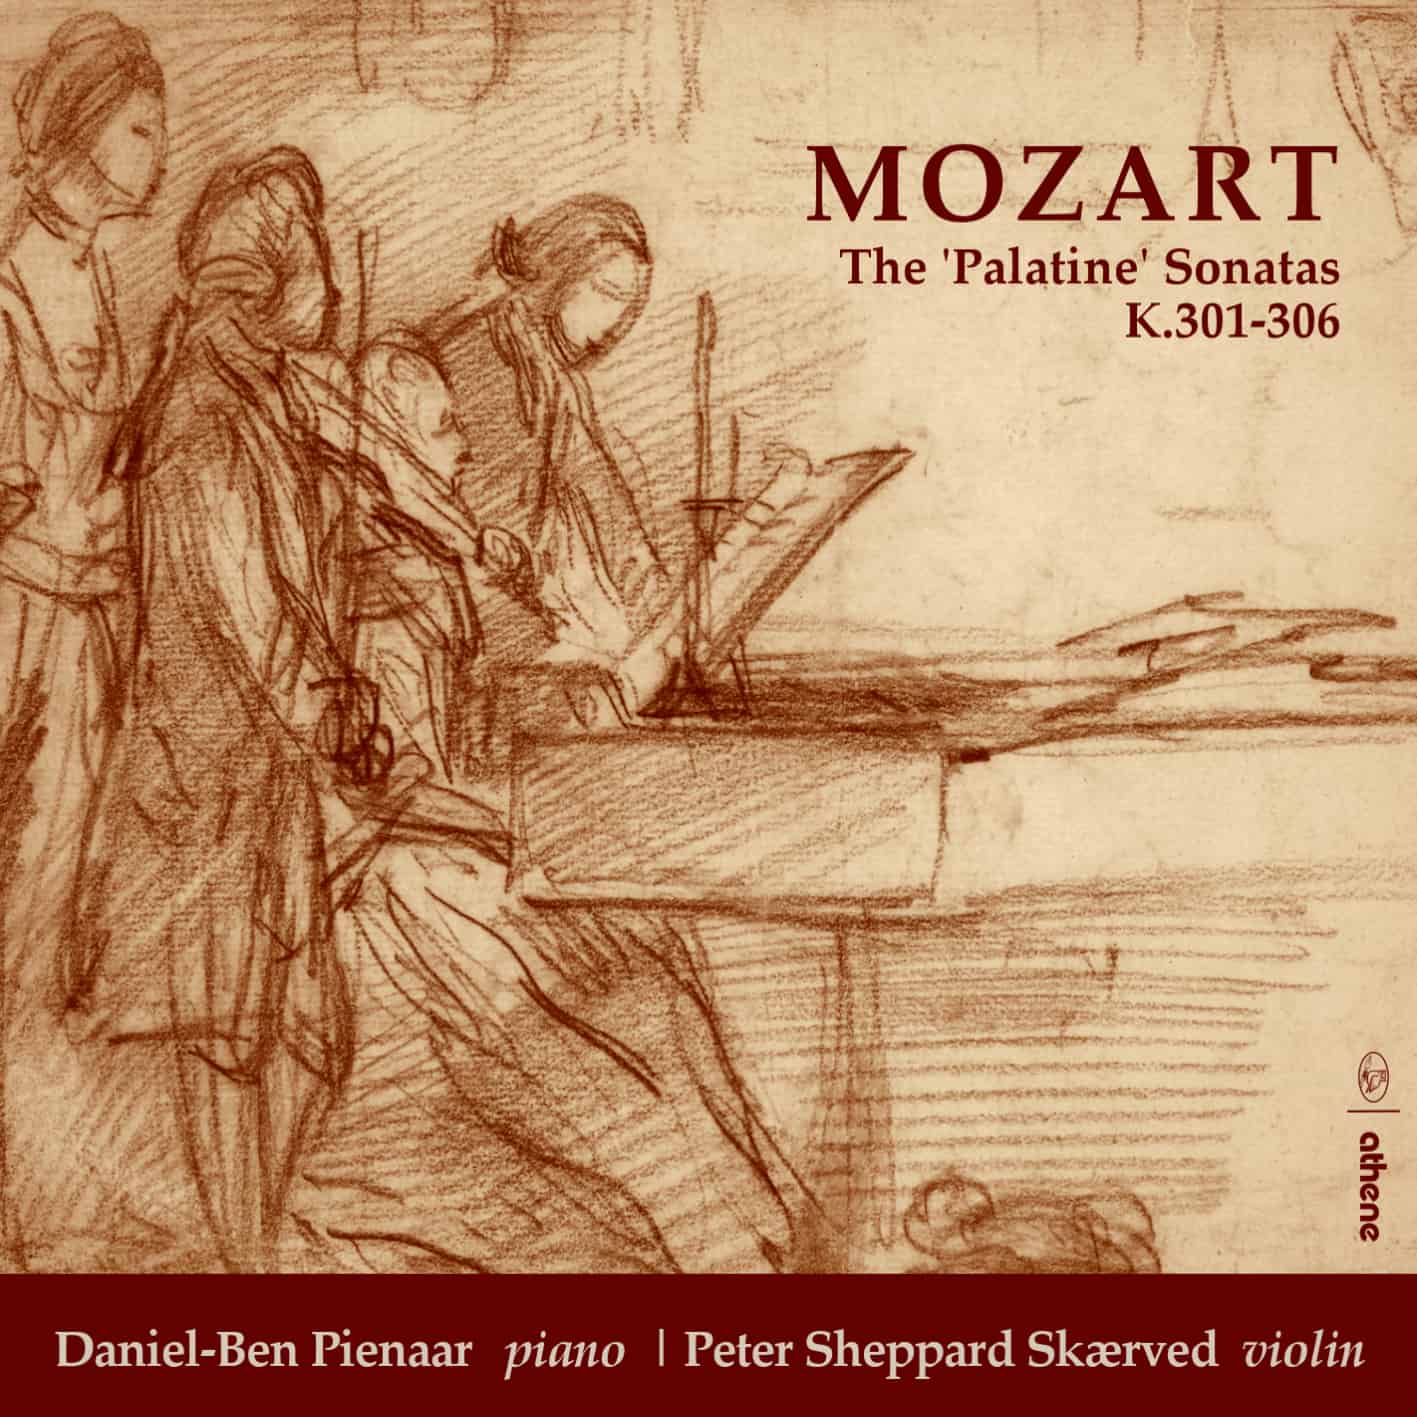 Mozart: The Palatine Sonatas for Piano with Violin K.301-306